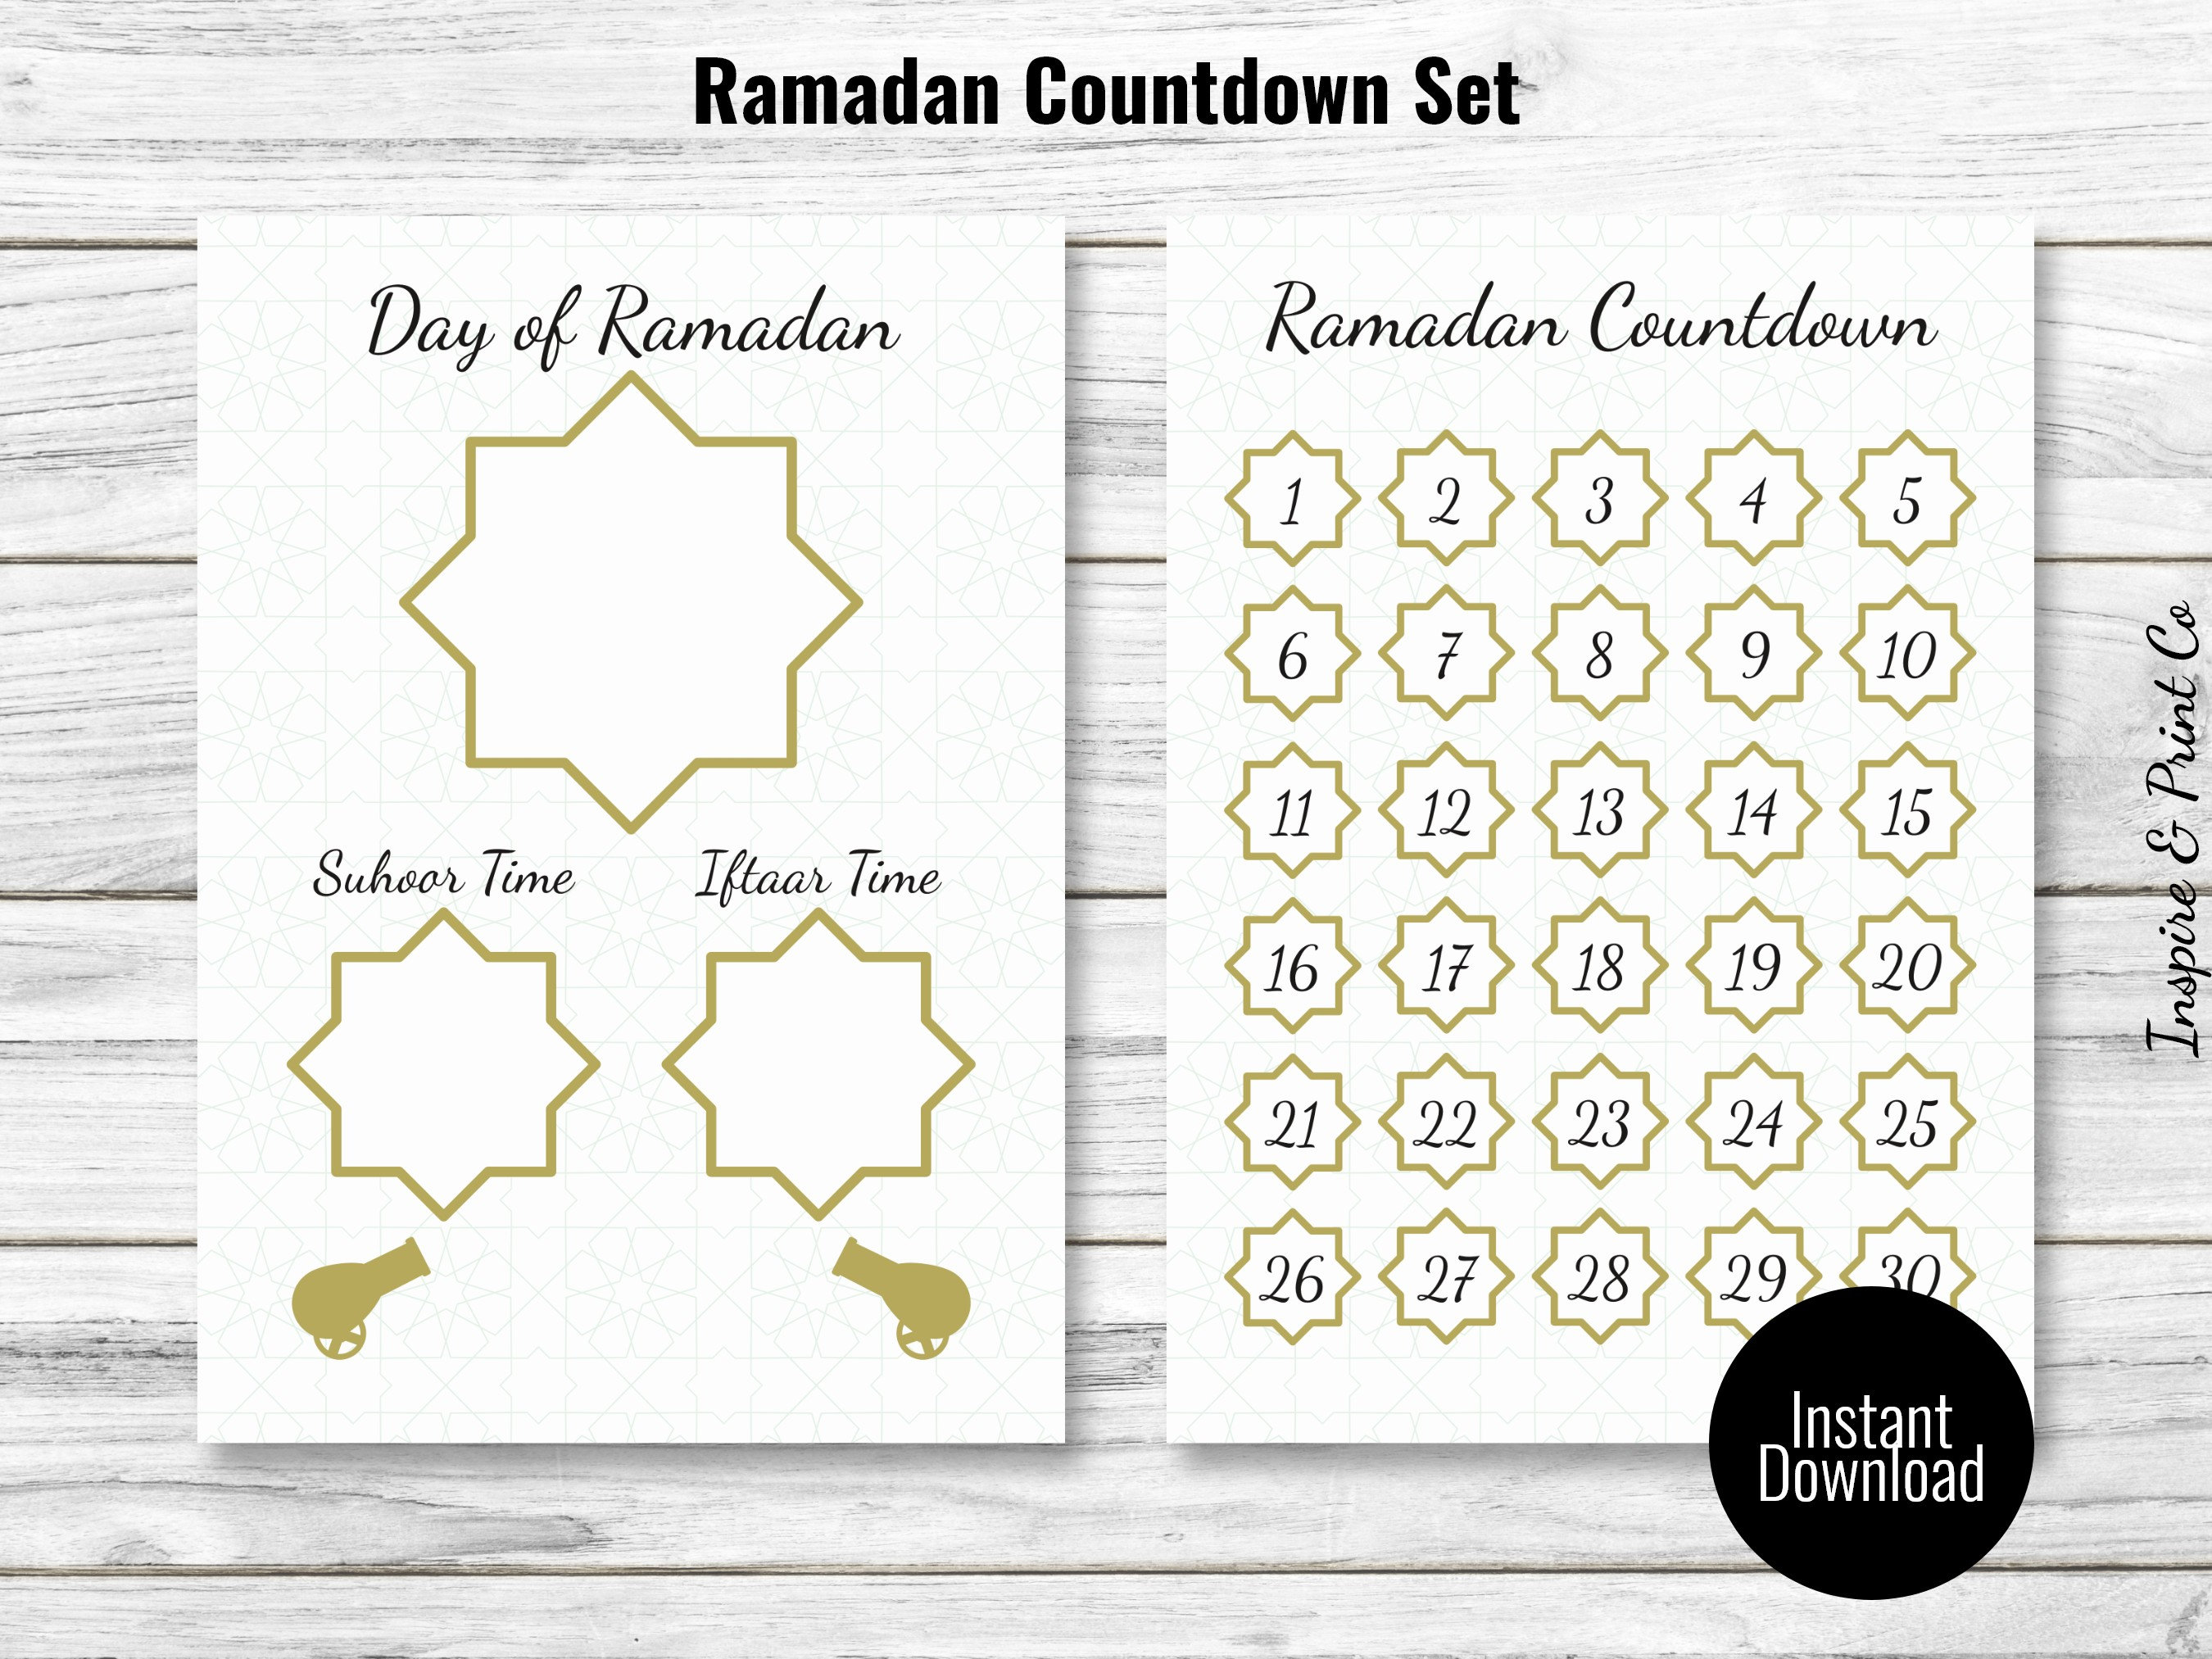 Ramadan Countdown Calendar Iftaar and Suhoor Timetable Etsy UK